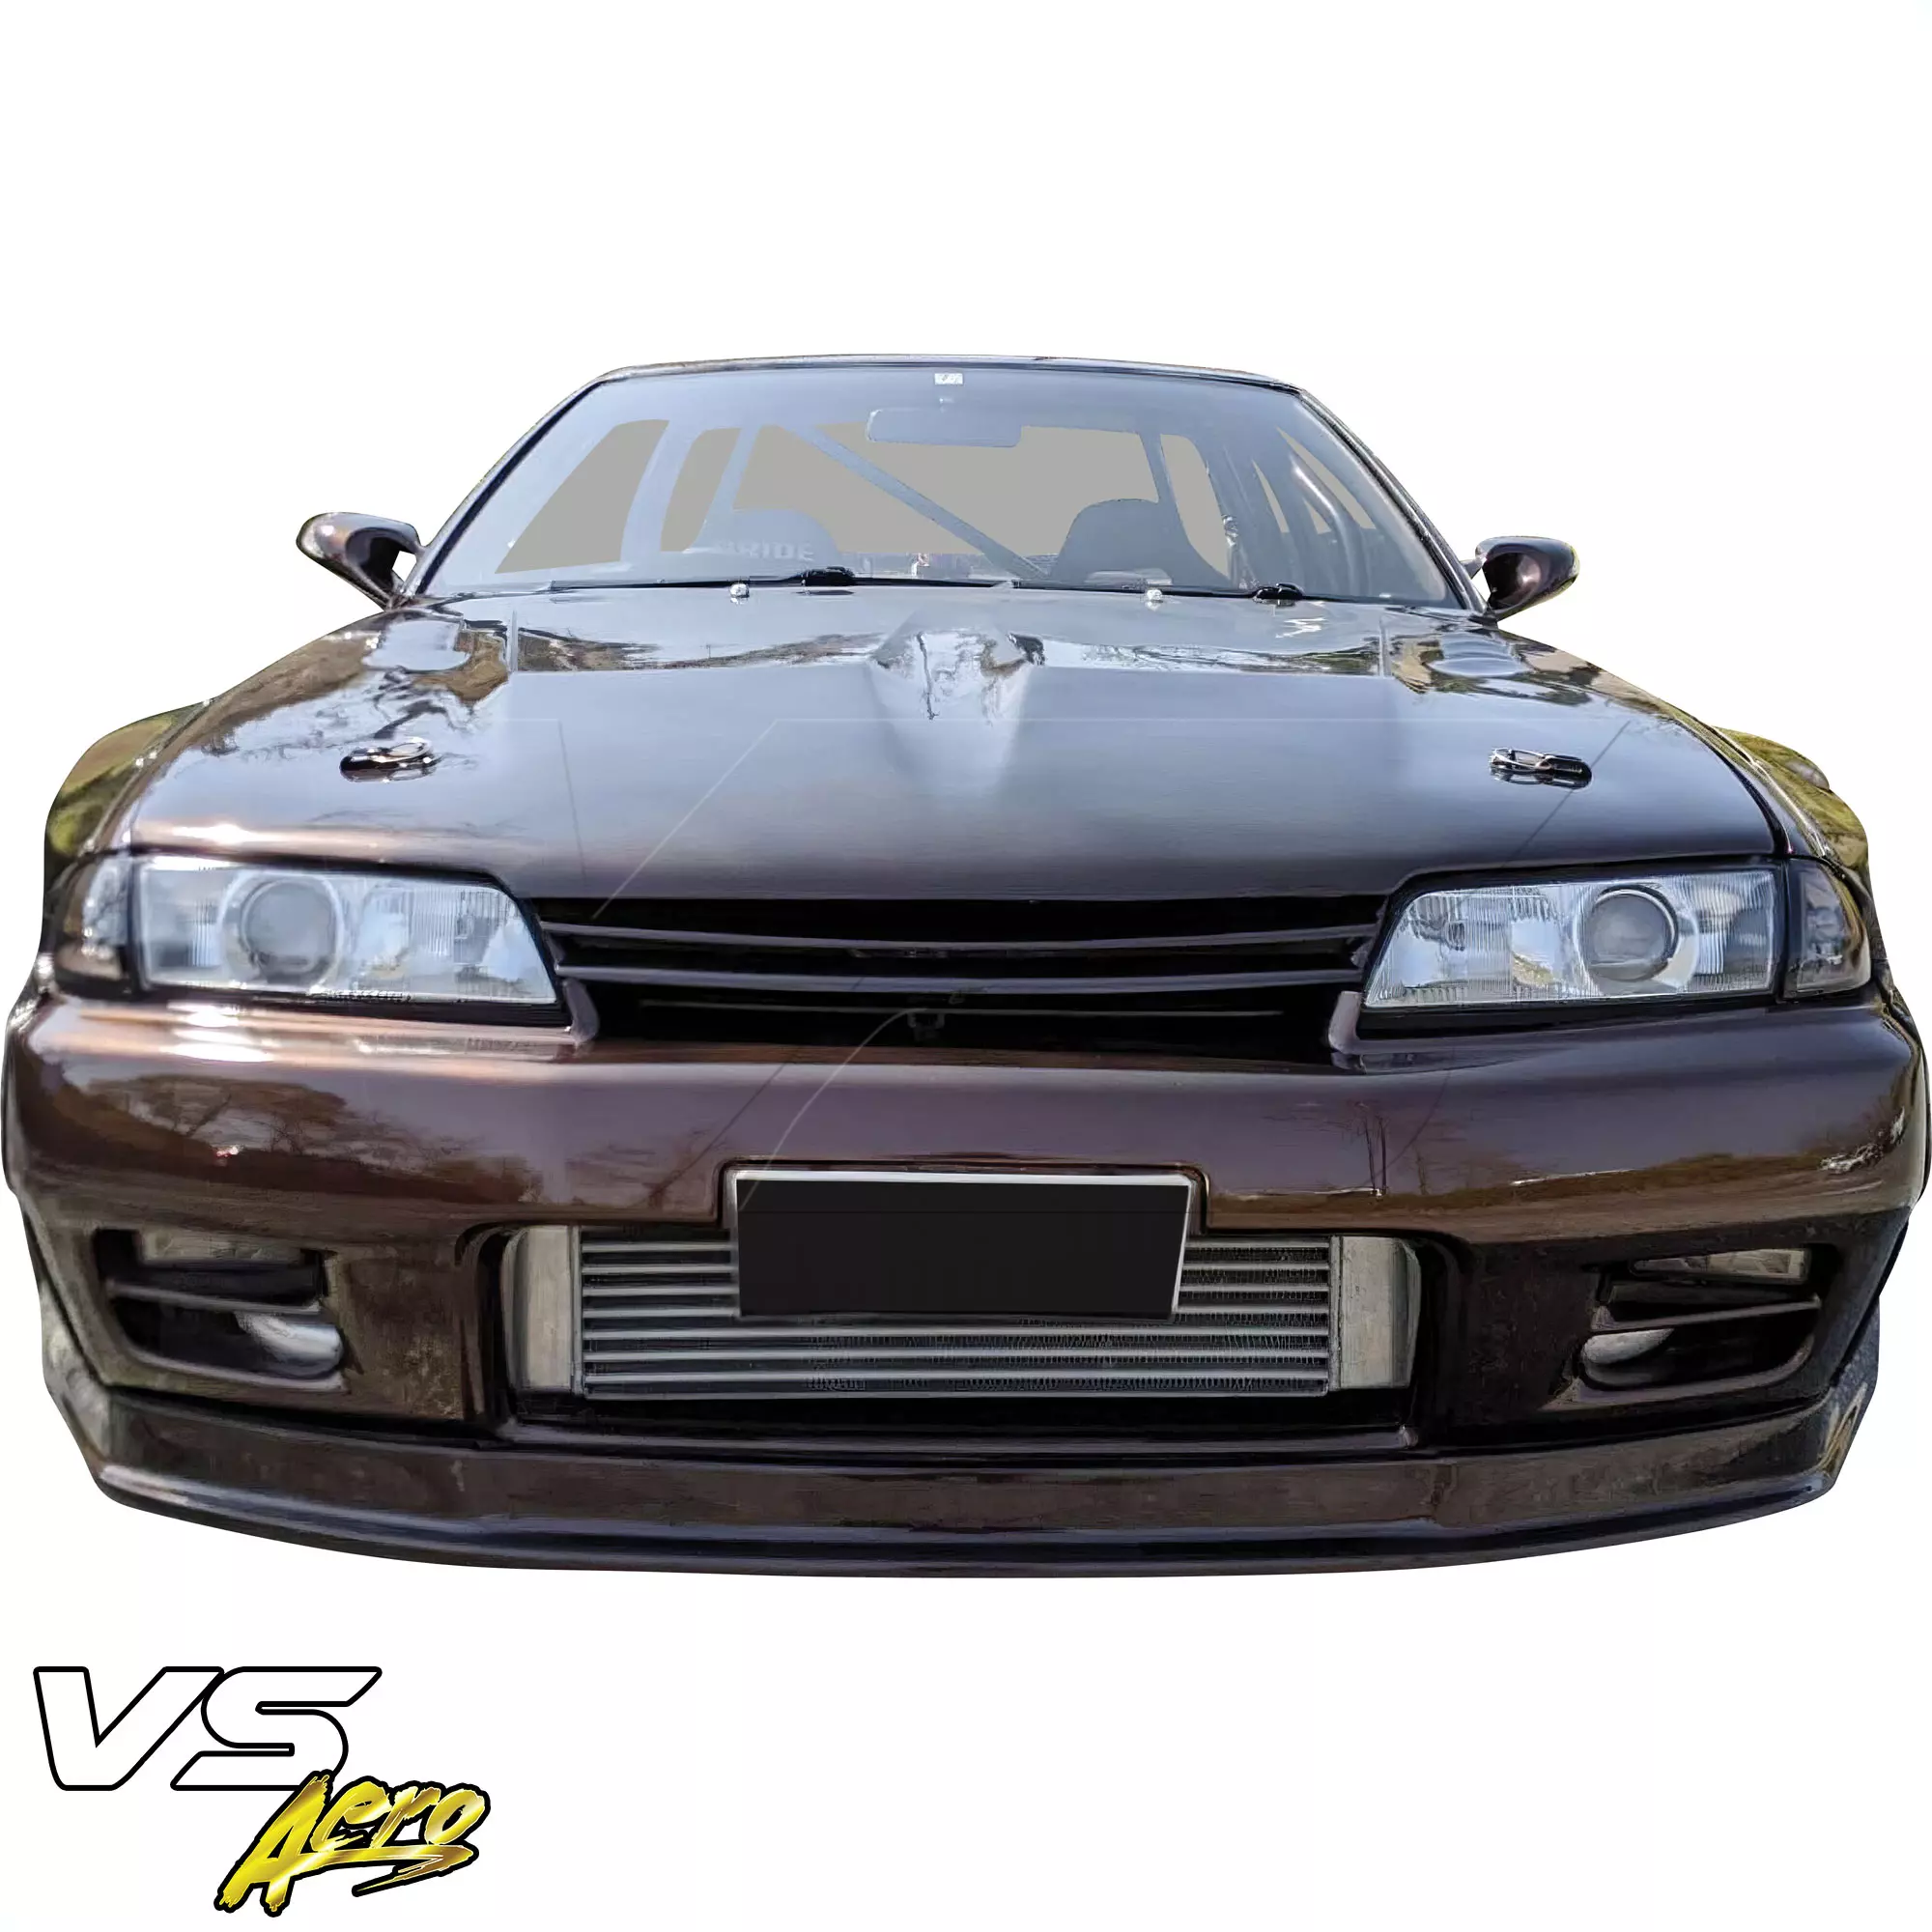 VSaero FRP TKYO Wide Body Kit > Nissan Skyline R32 1990-1994 > 2dr Coupe - Image 17